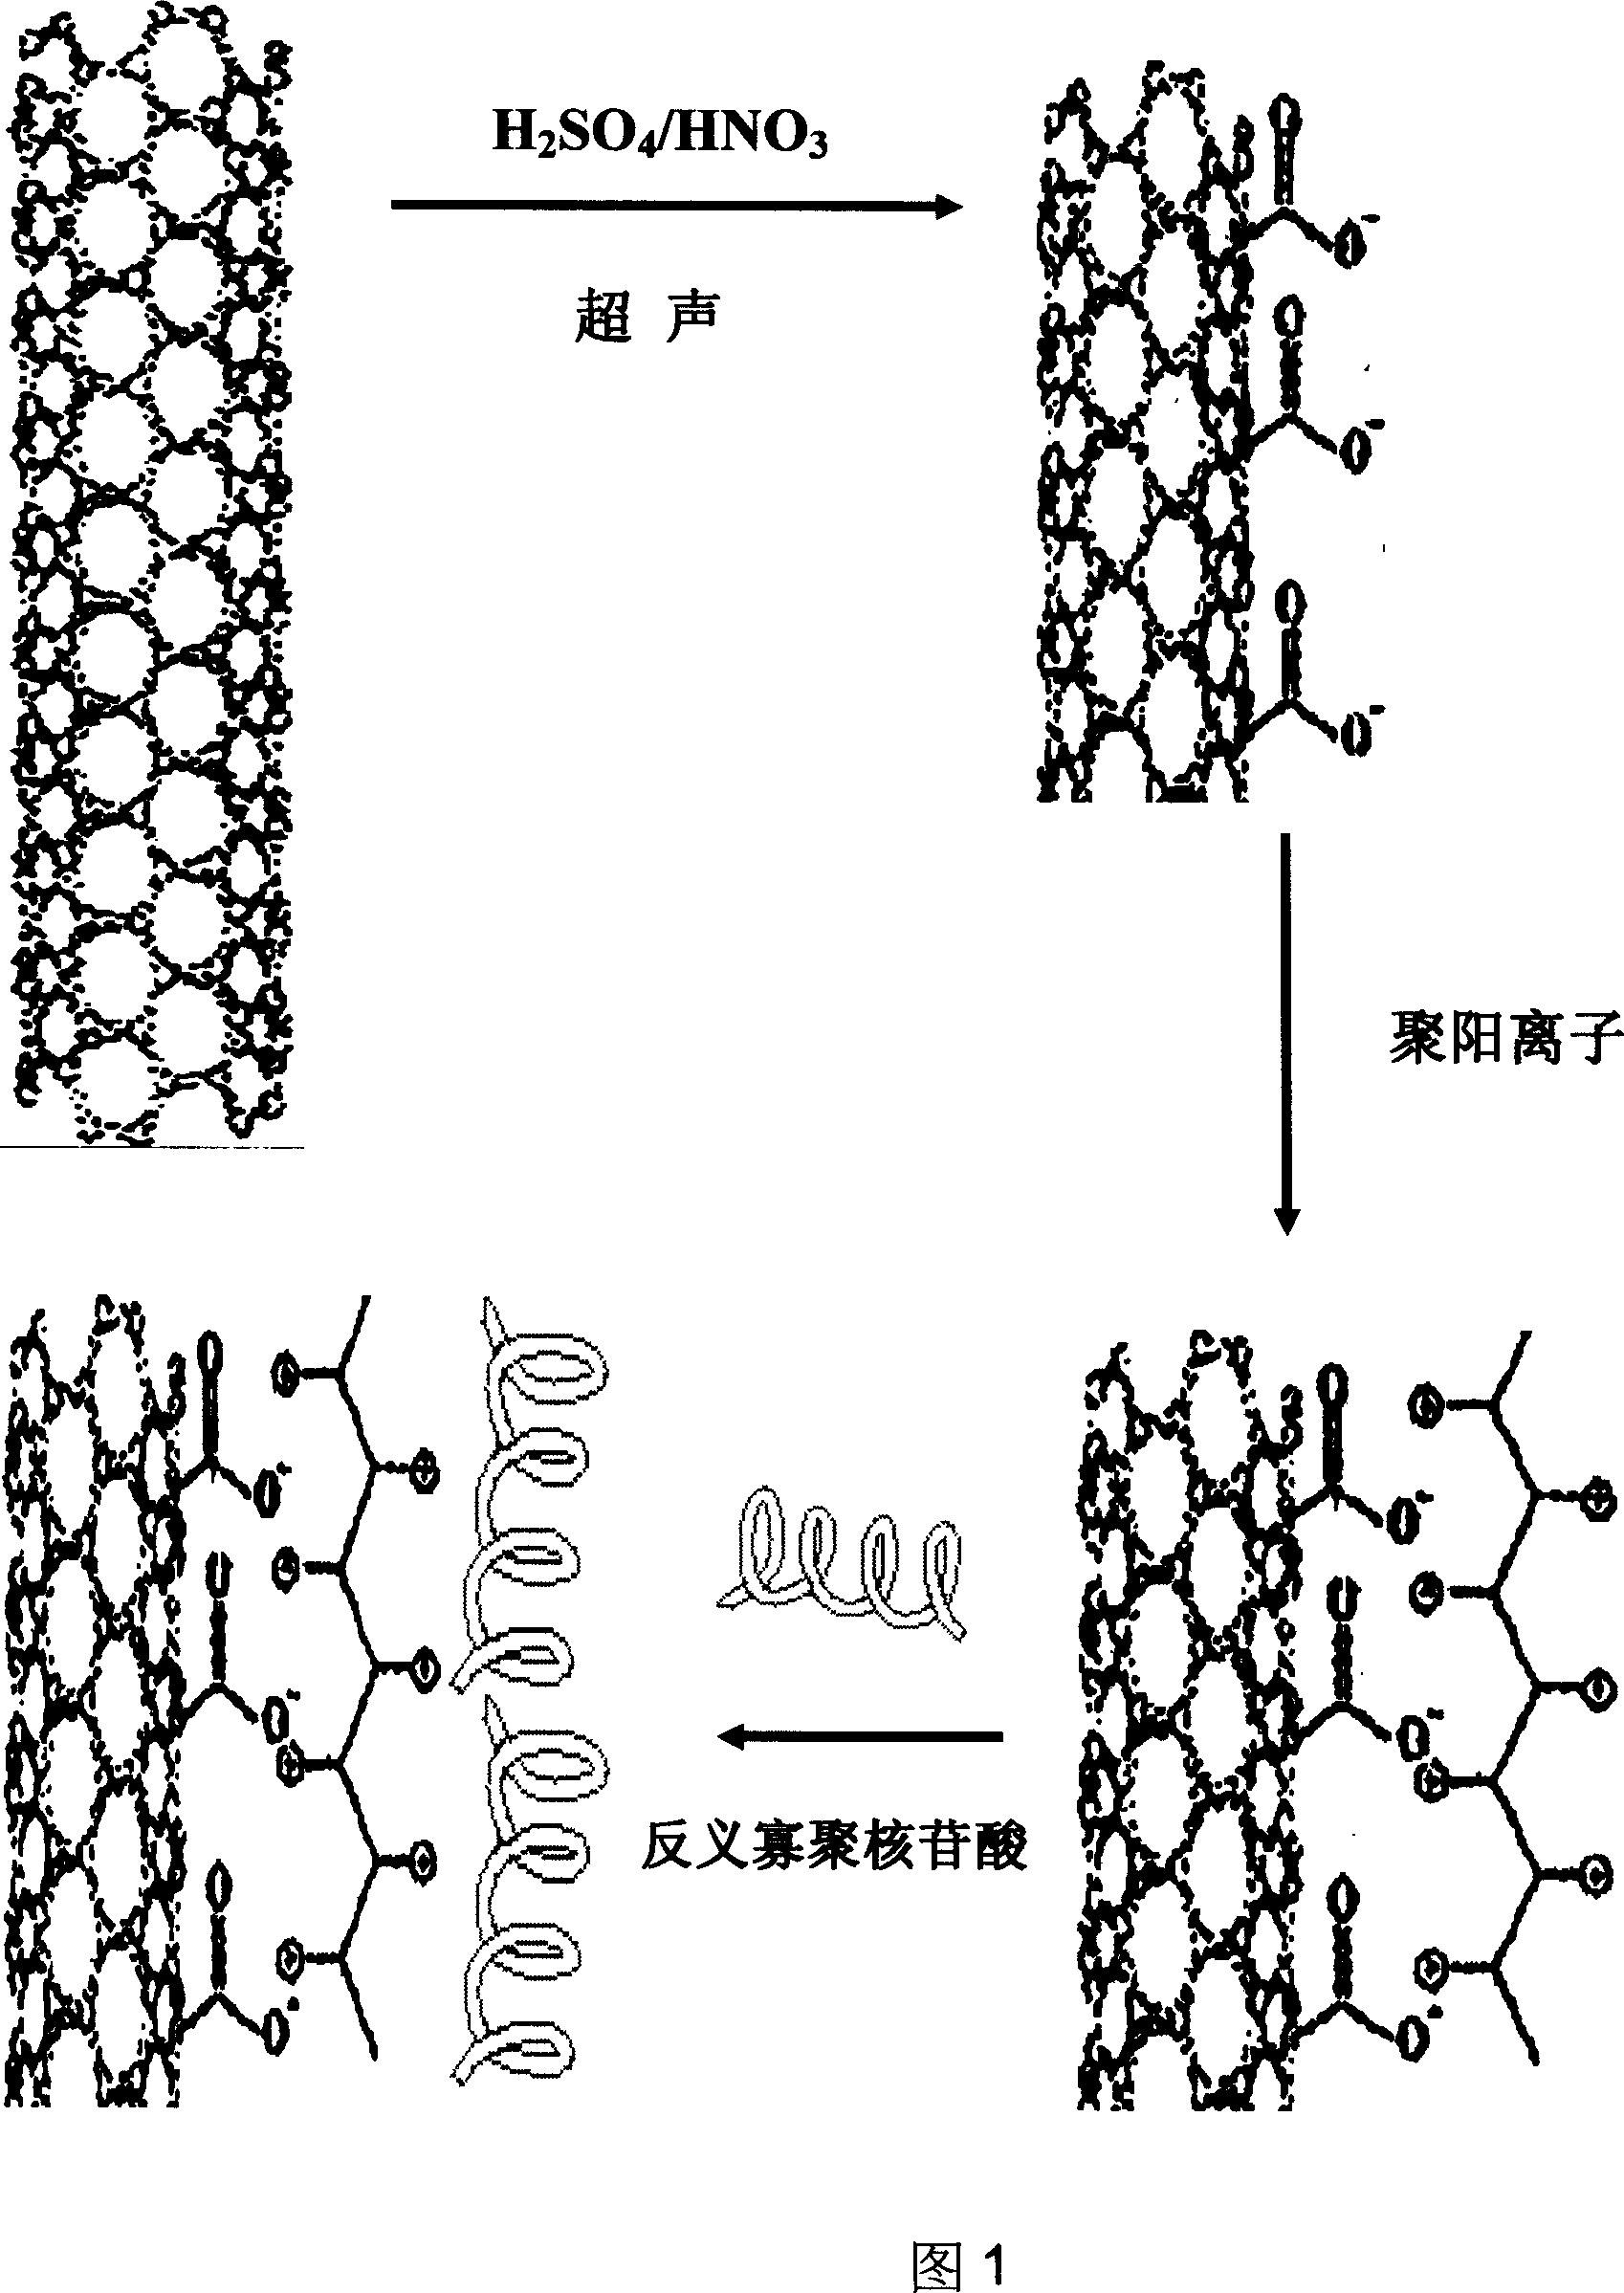 Antisense oligonucleotide-carbon nanotube medicament vector